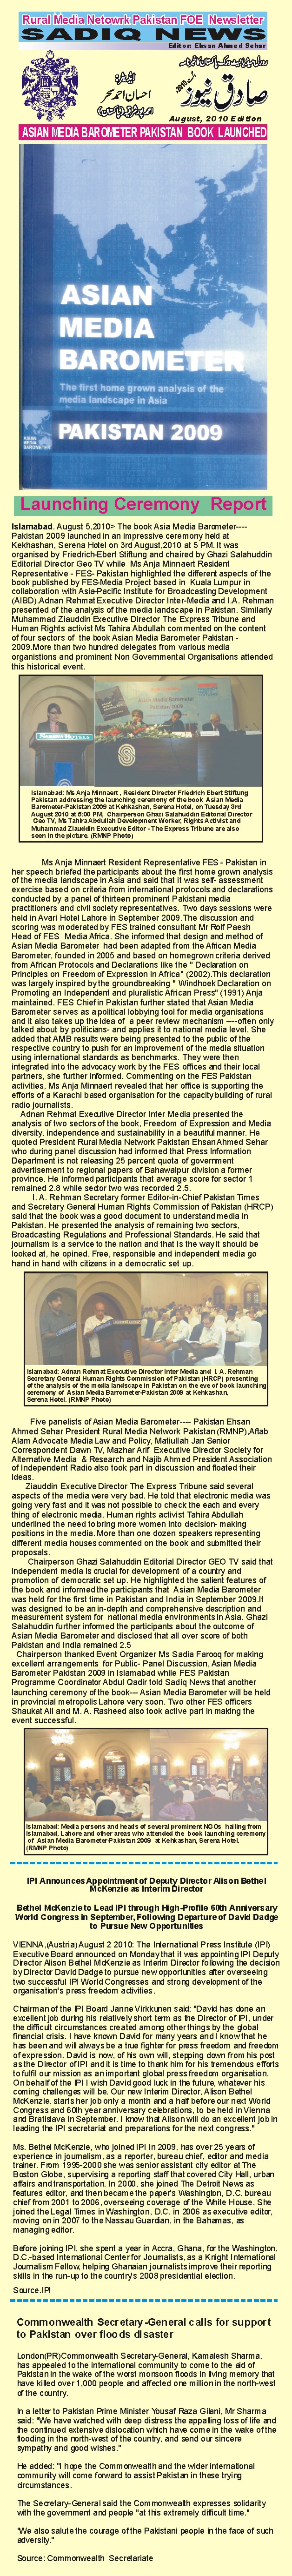 FOE Newsletter Sadiq News English online edition August 2010